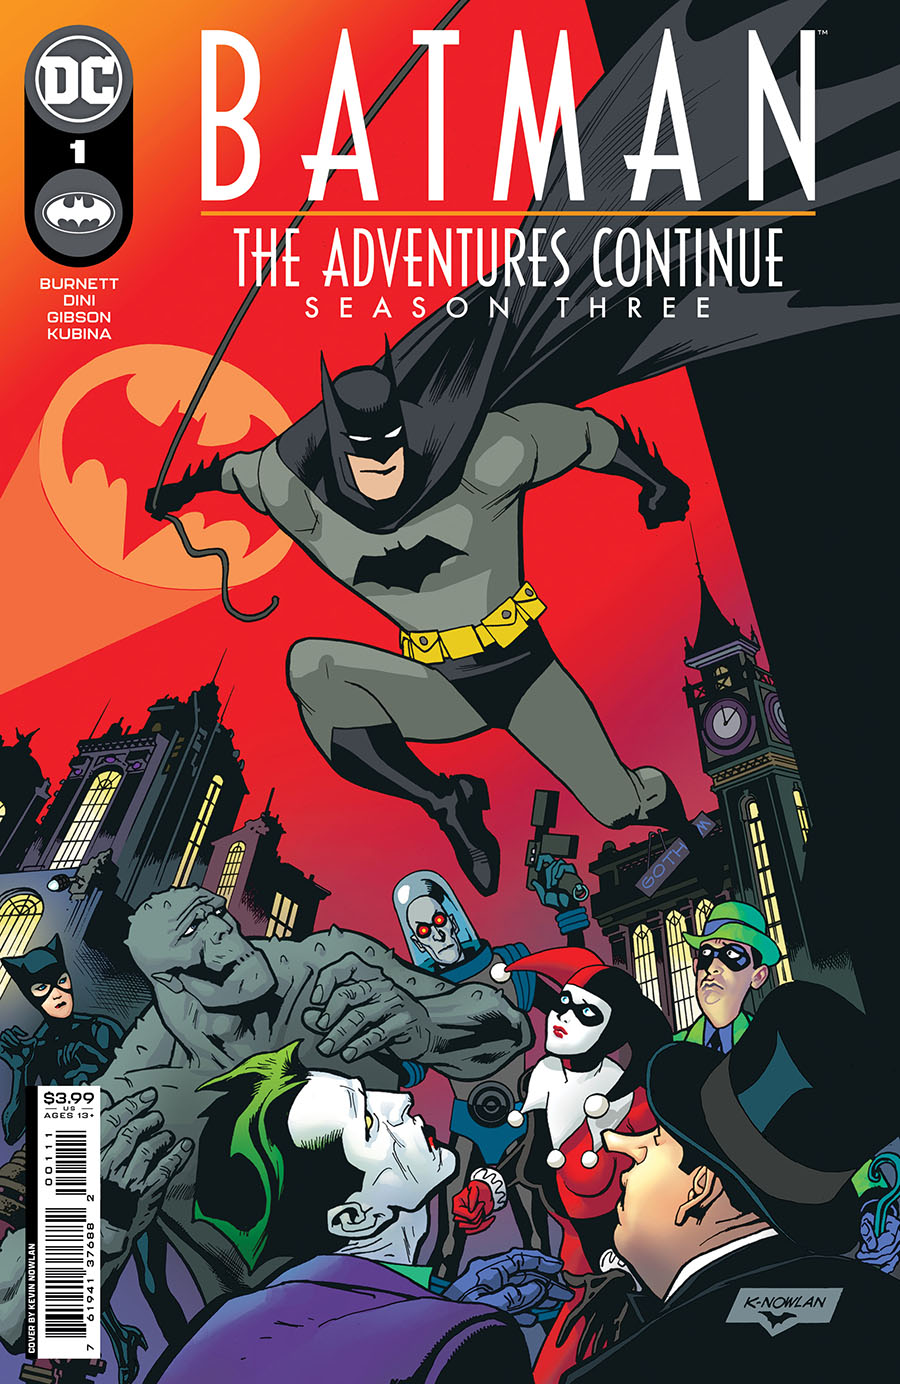 Batman The Adventures Continue Season III #1 Cover A Regular Kevin Nowlan Cover